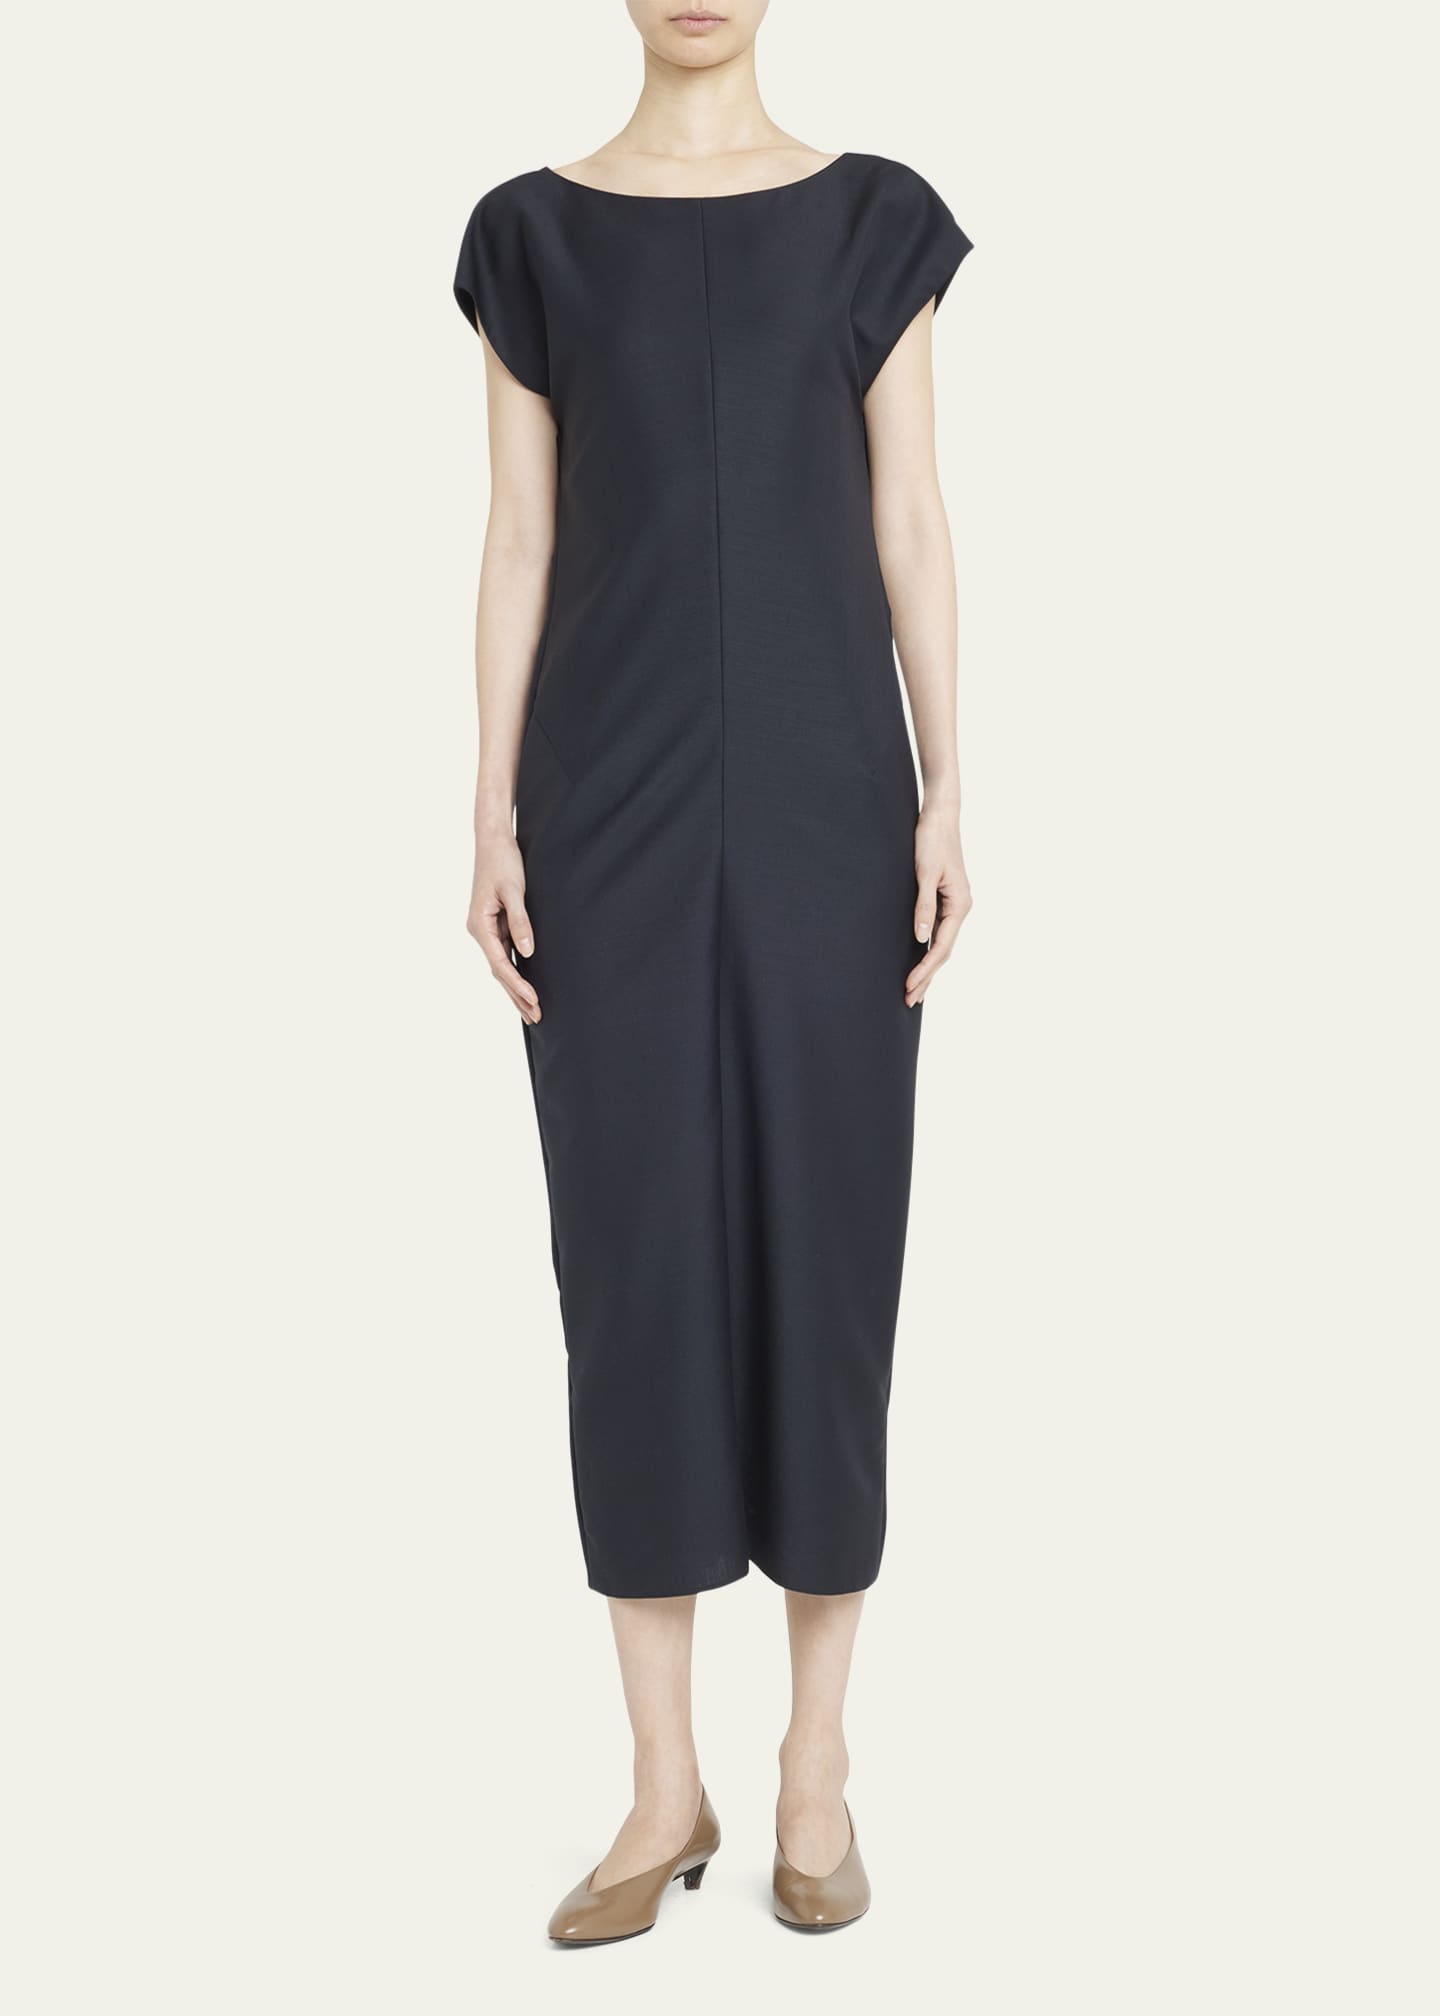 THE ROW Blaise Cap-Sleeve Midi Dress - Bergdorf Goodman